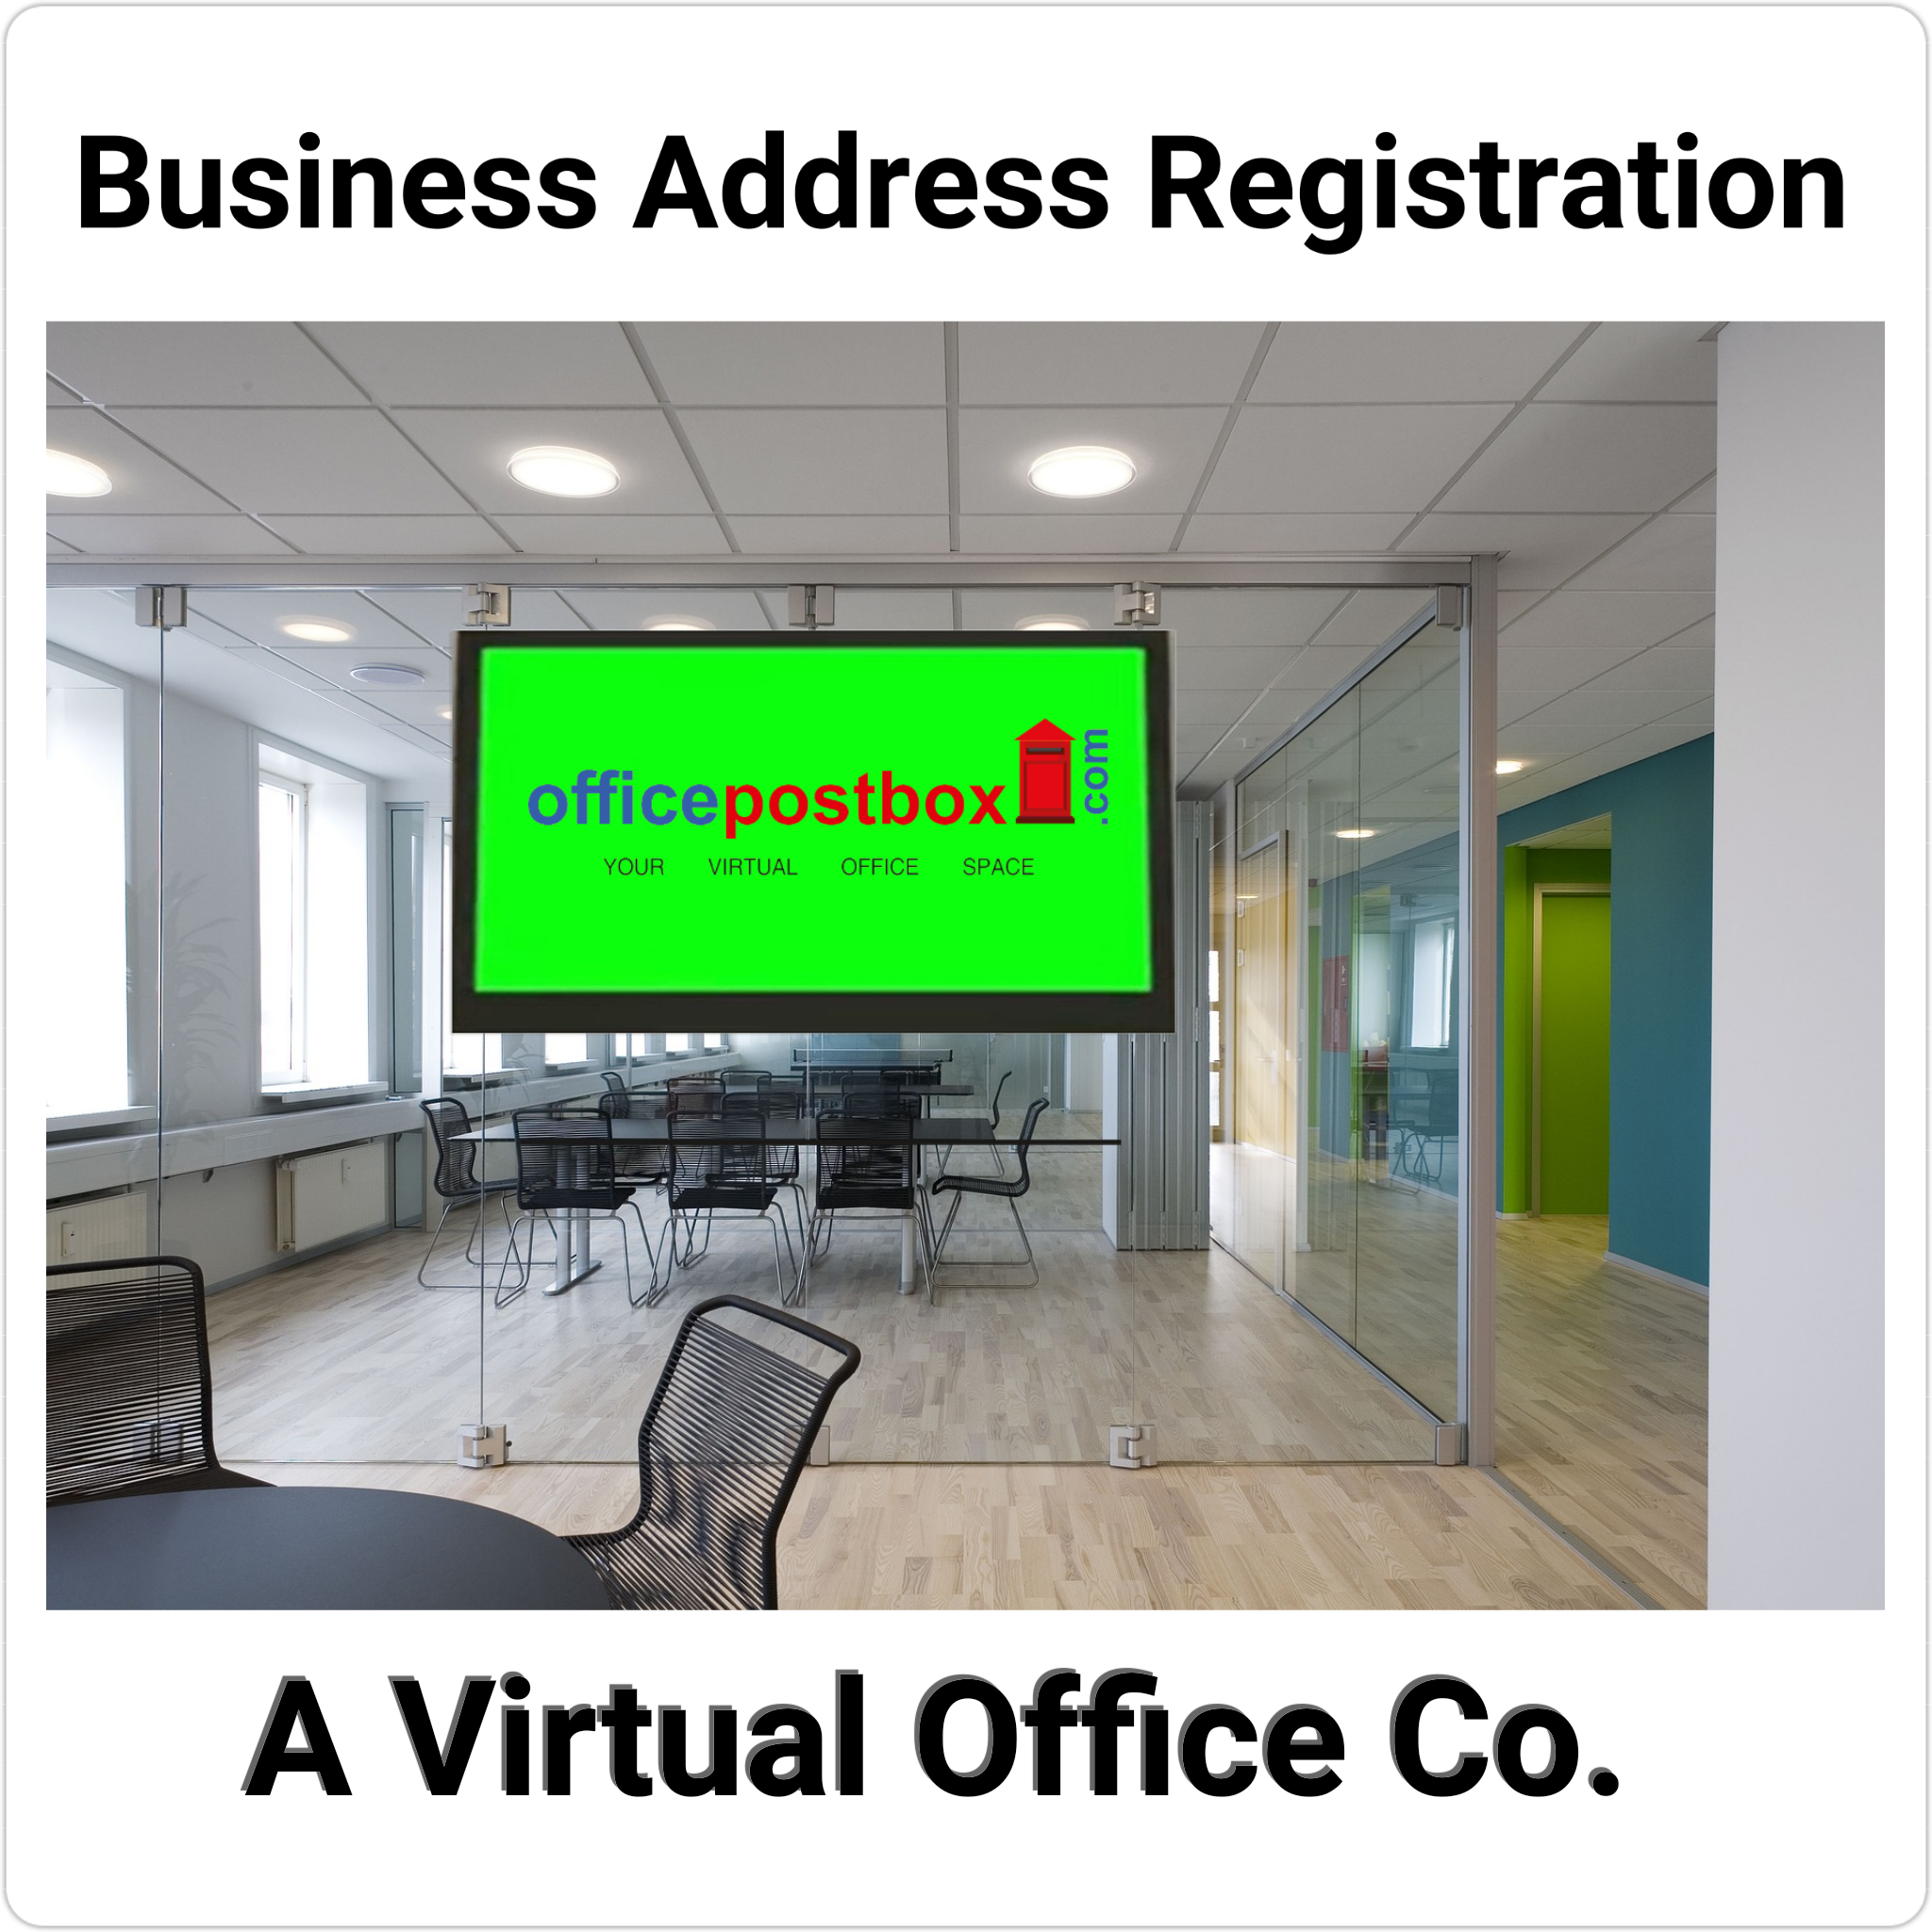 Business Address Registration